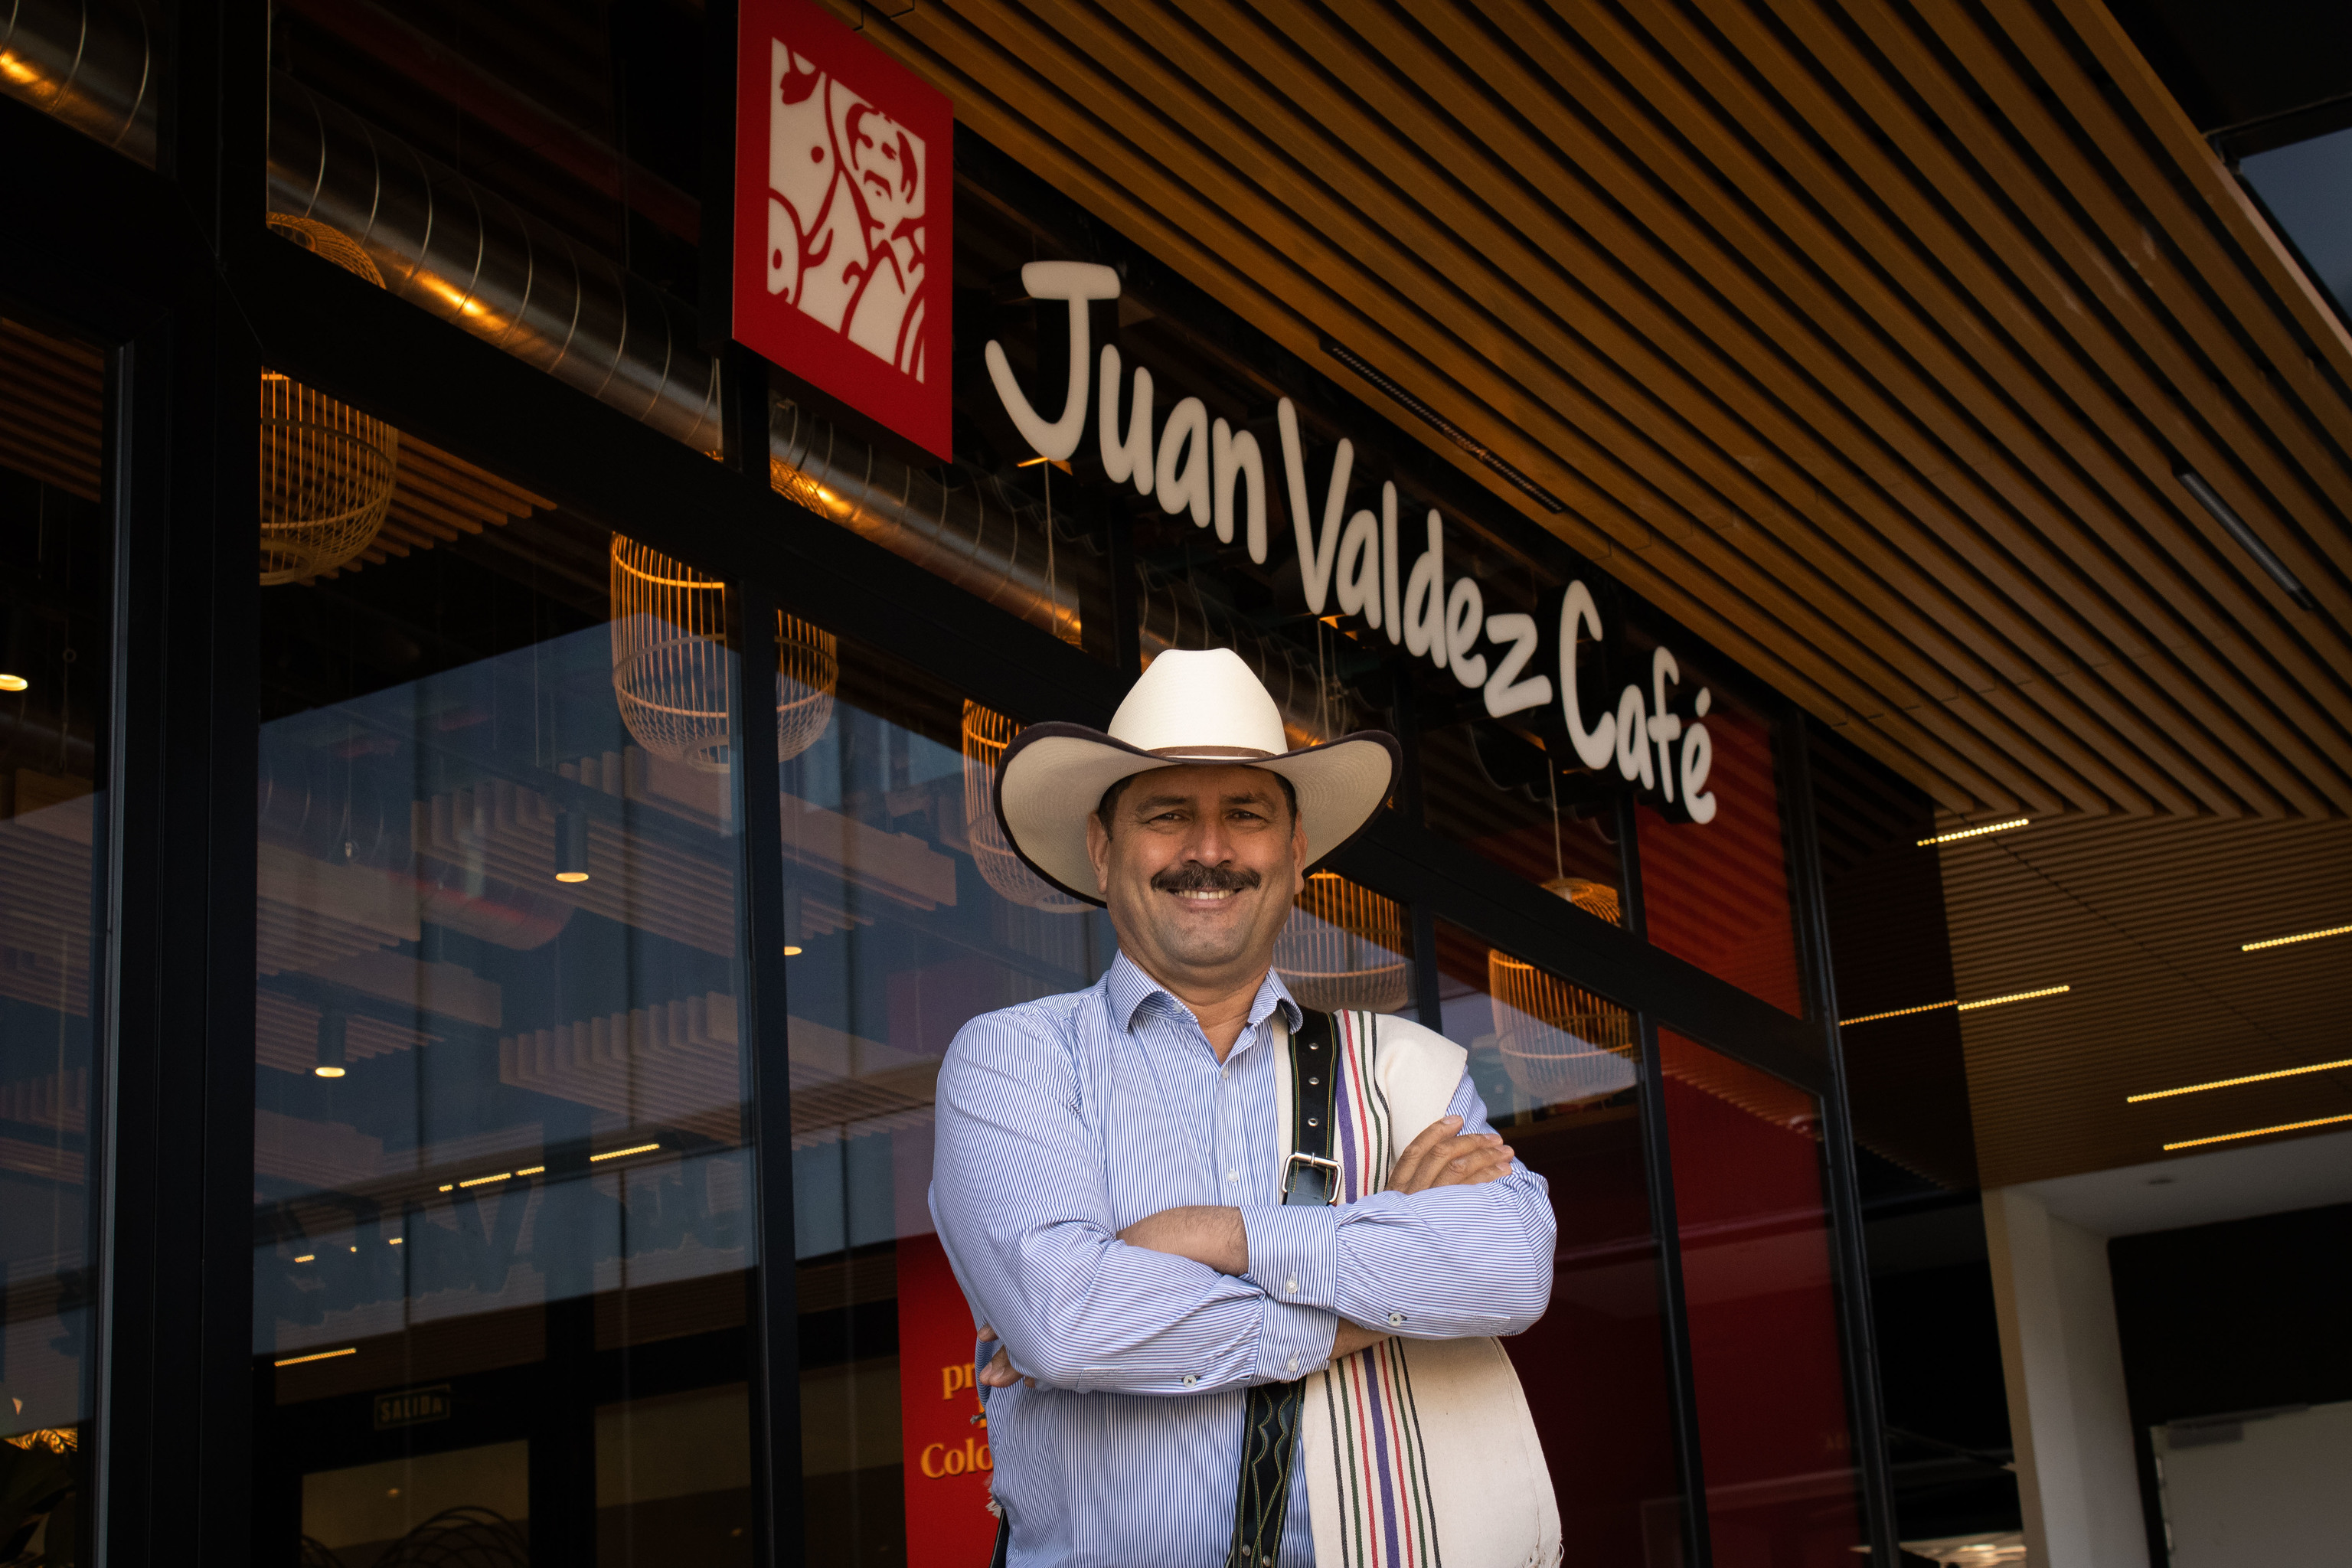 El personaje de Juan Valdez, imagen del café 100% de Colombia.